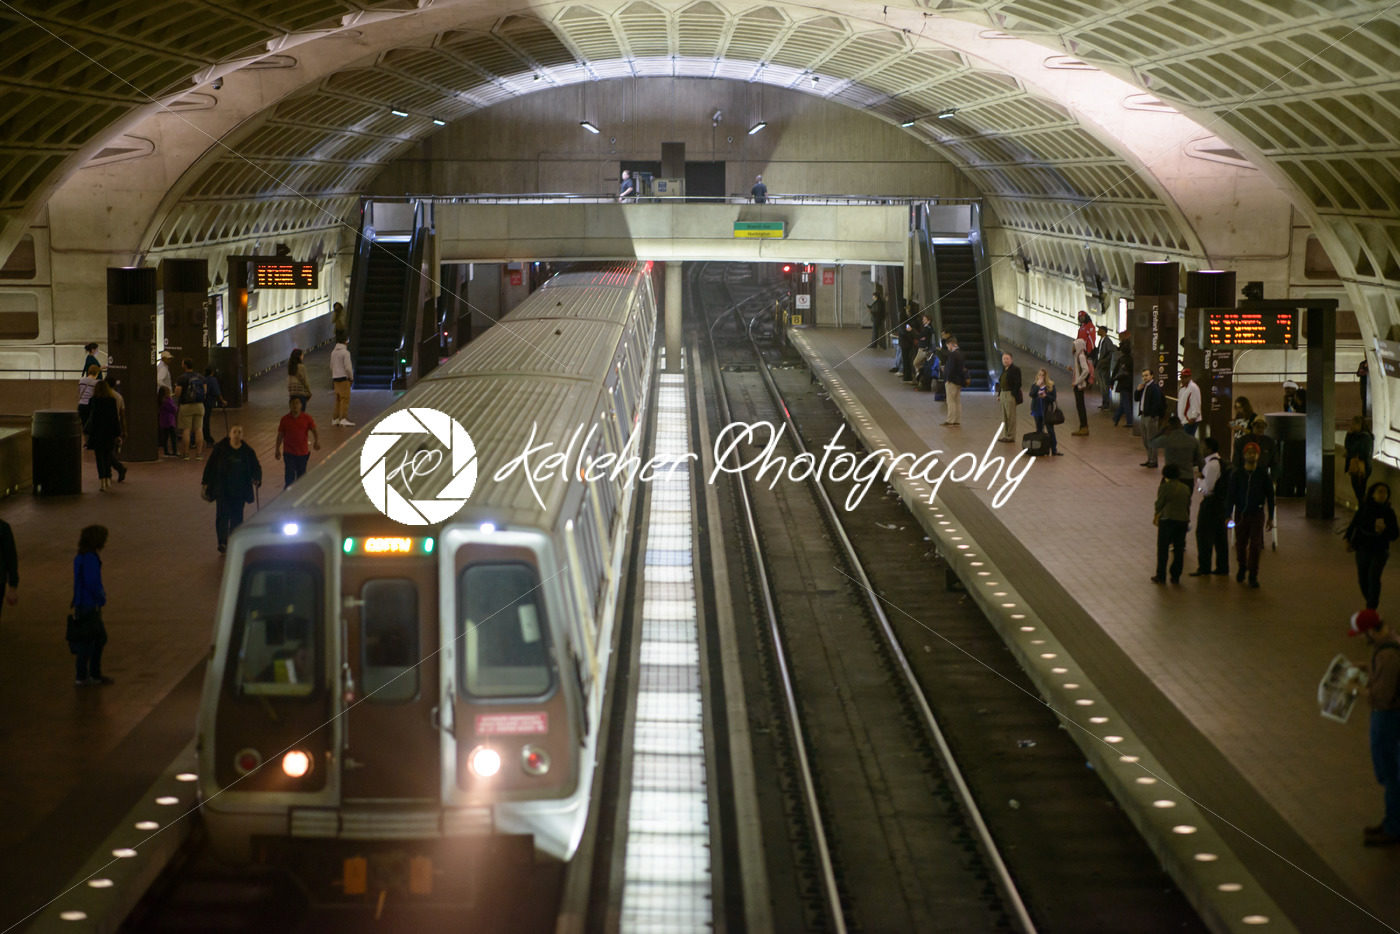 WASHINGTON, DISTRICT OF COLUMBIA – APRIL 14: Washington DC Metro Subway Train Station on April 14, 2017 - Kelleher Photography Store